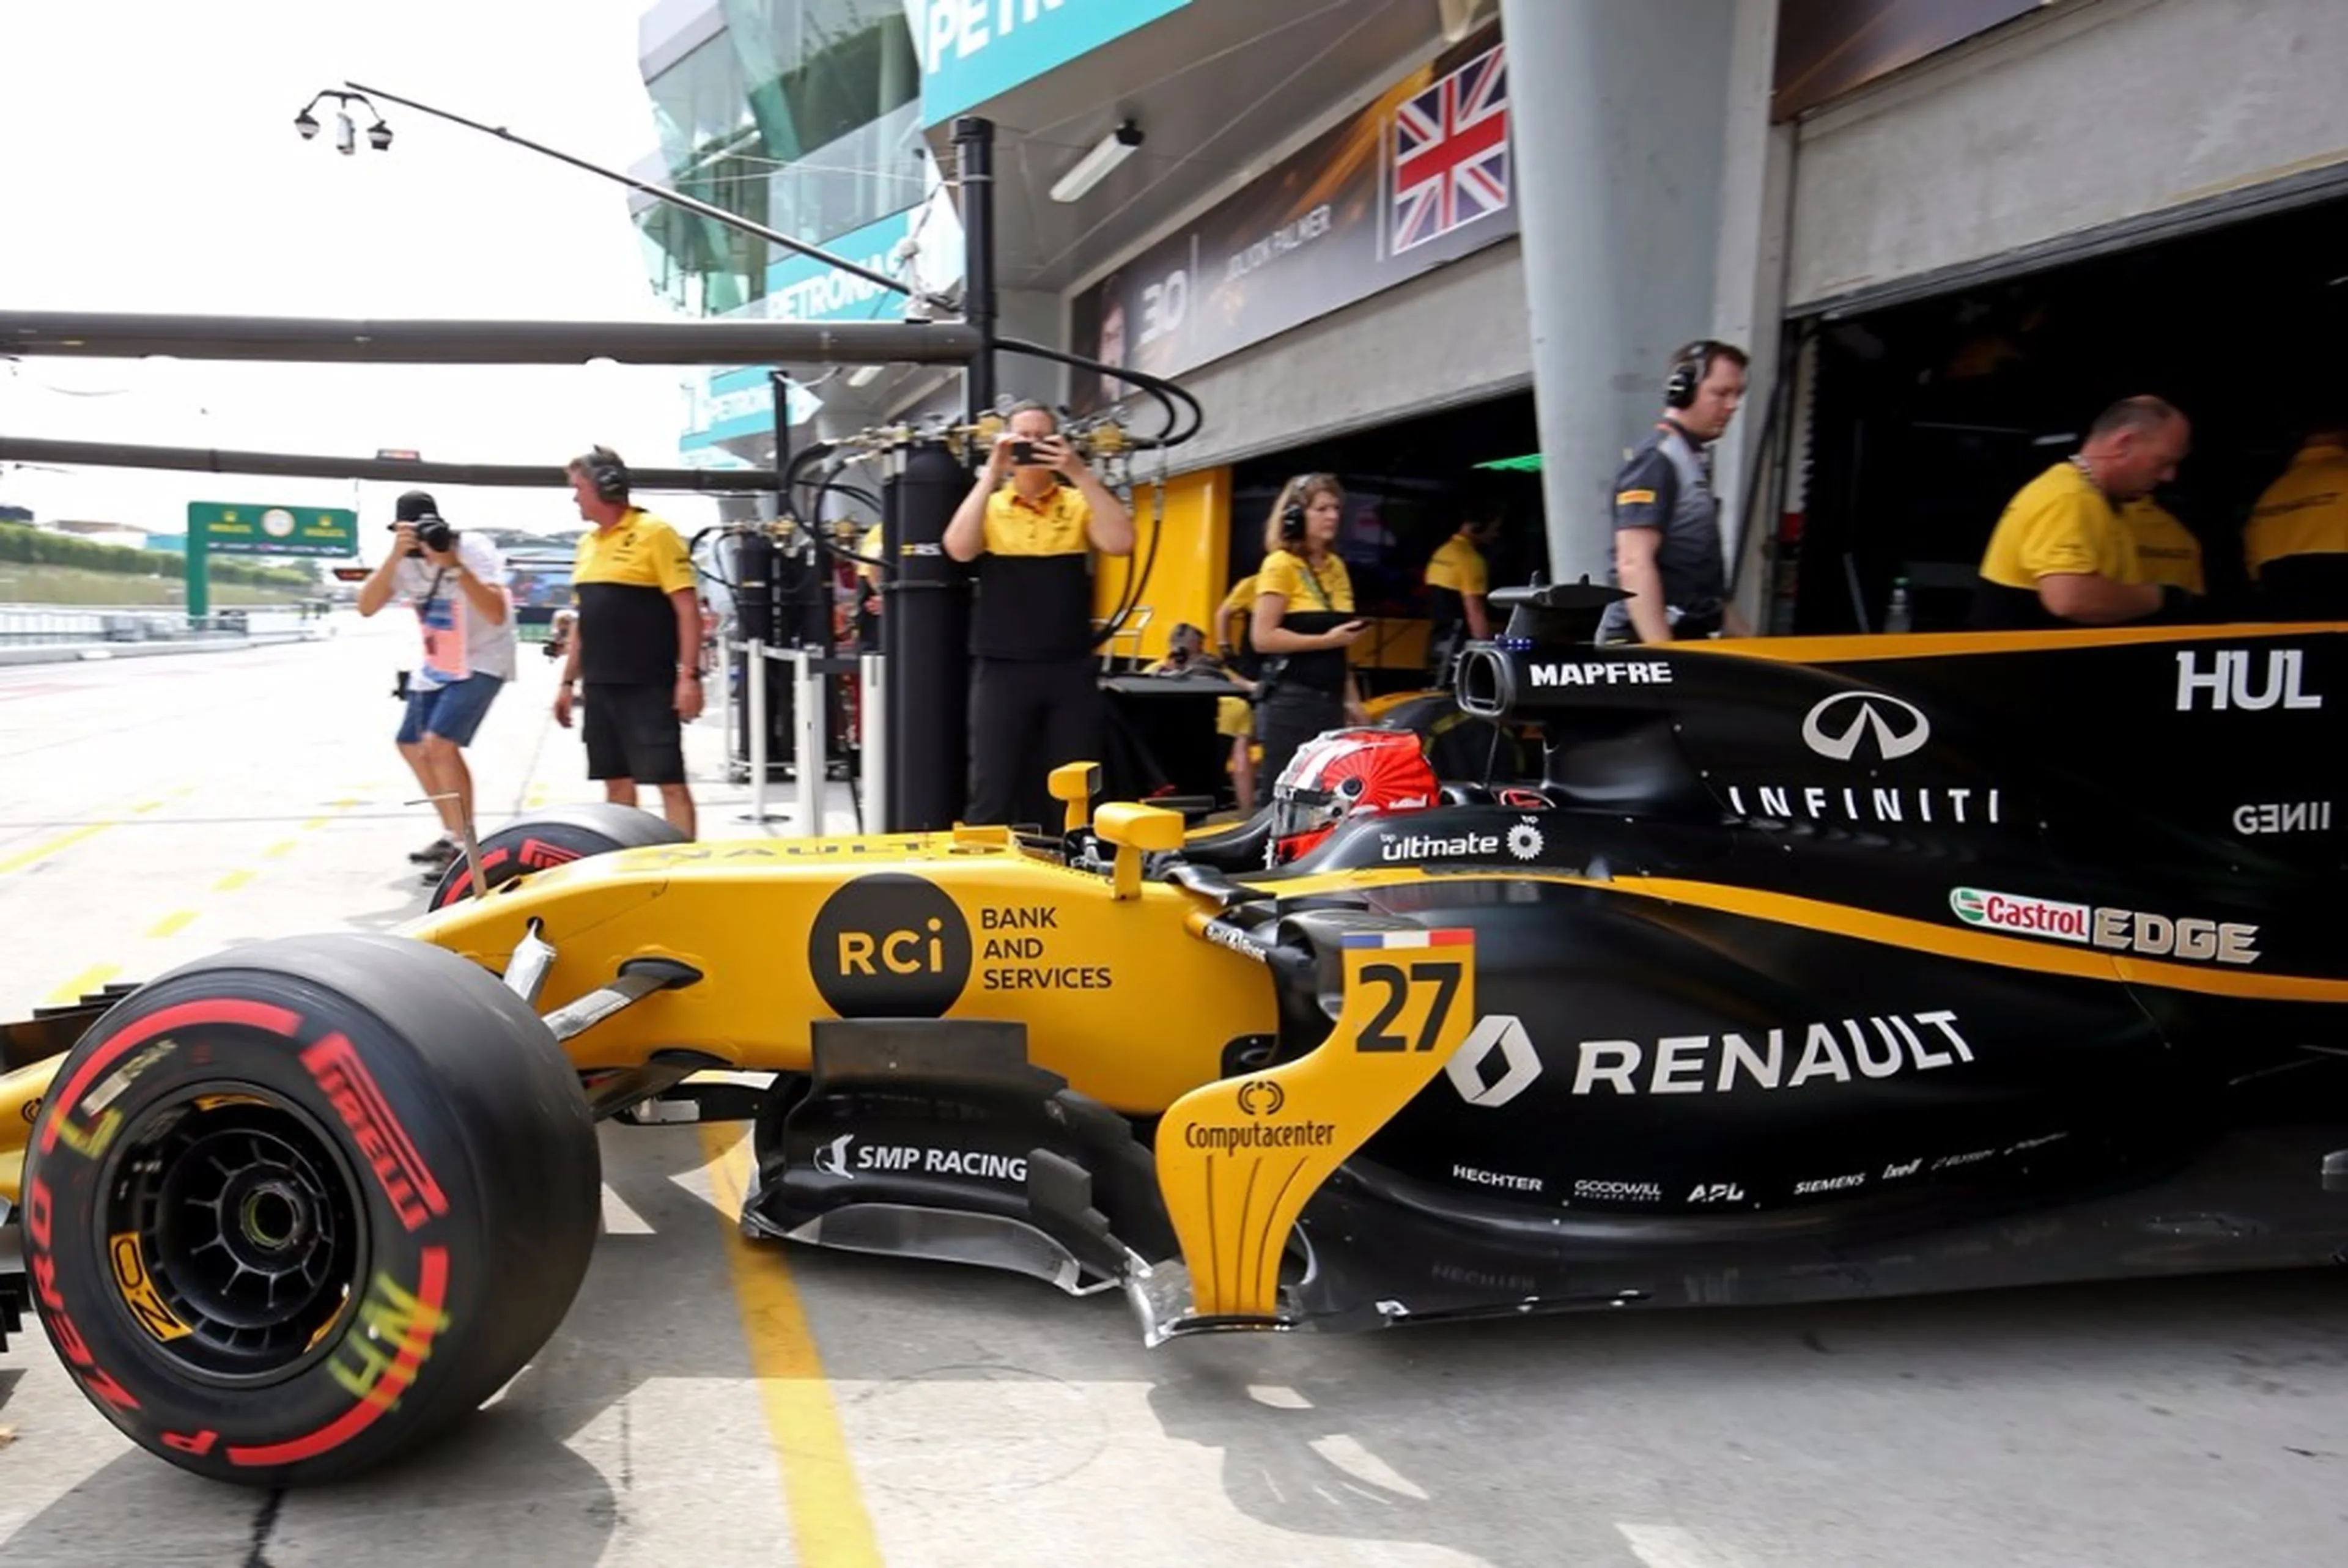 Renault vuelve a la normalidad un GP después: Hülkenberg 8º, Palmer 12º